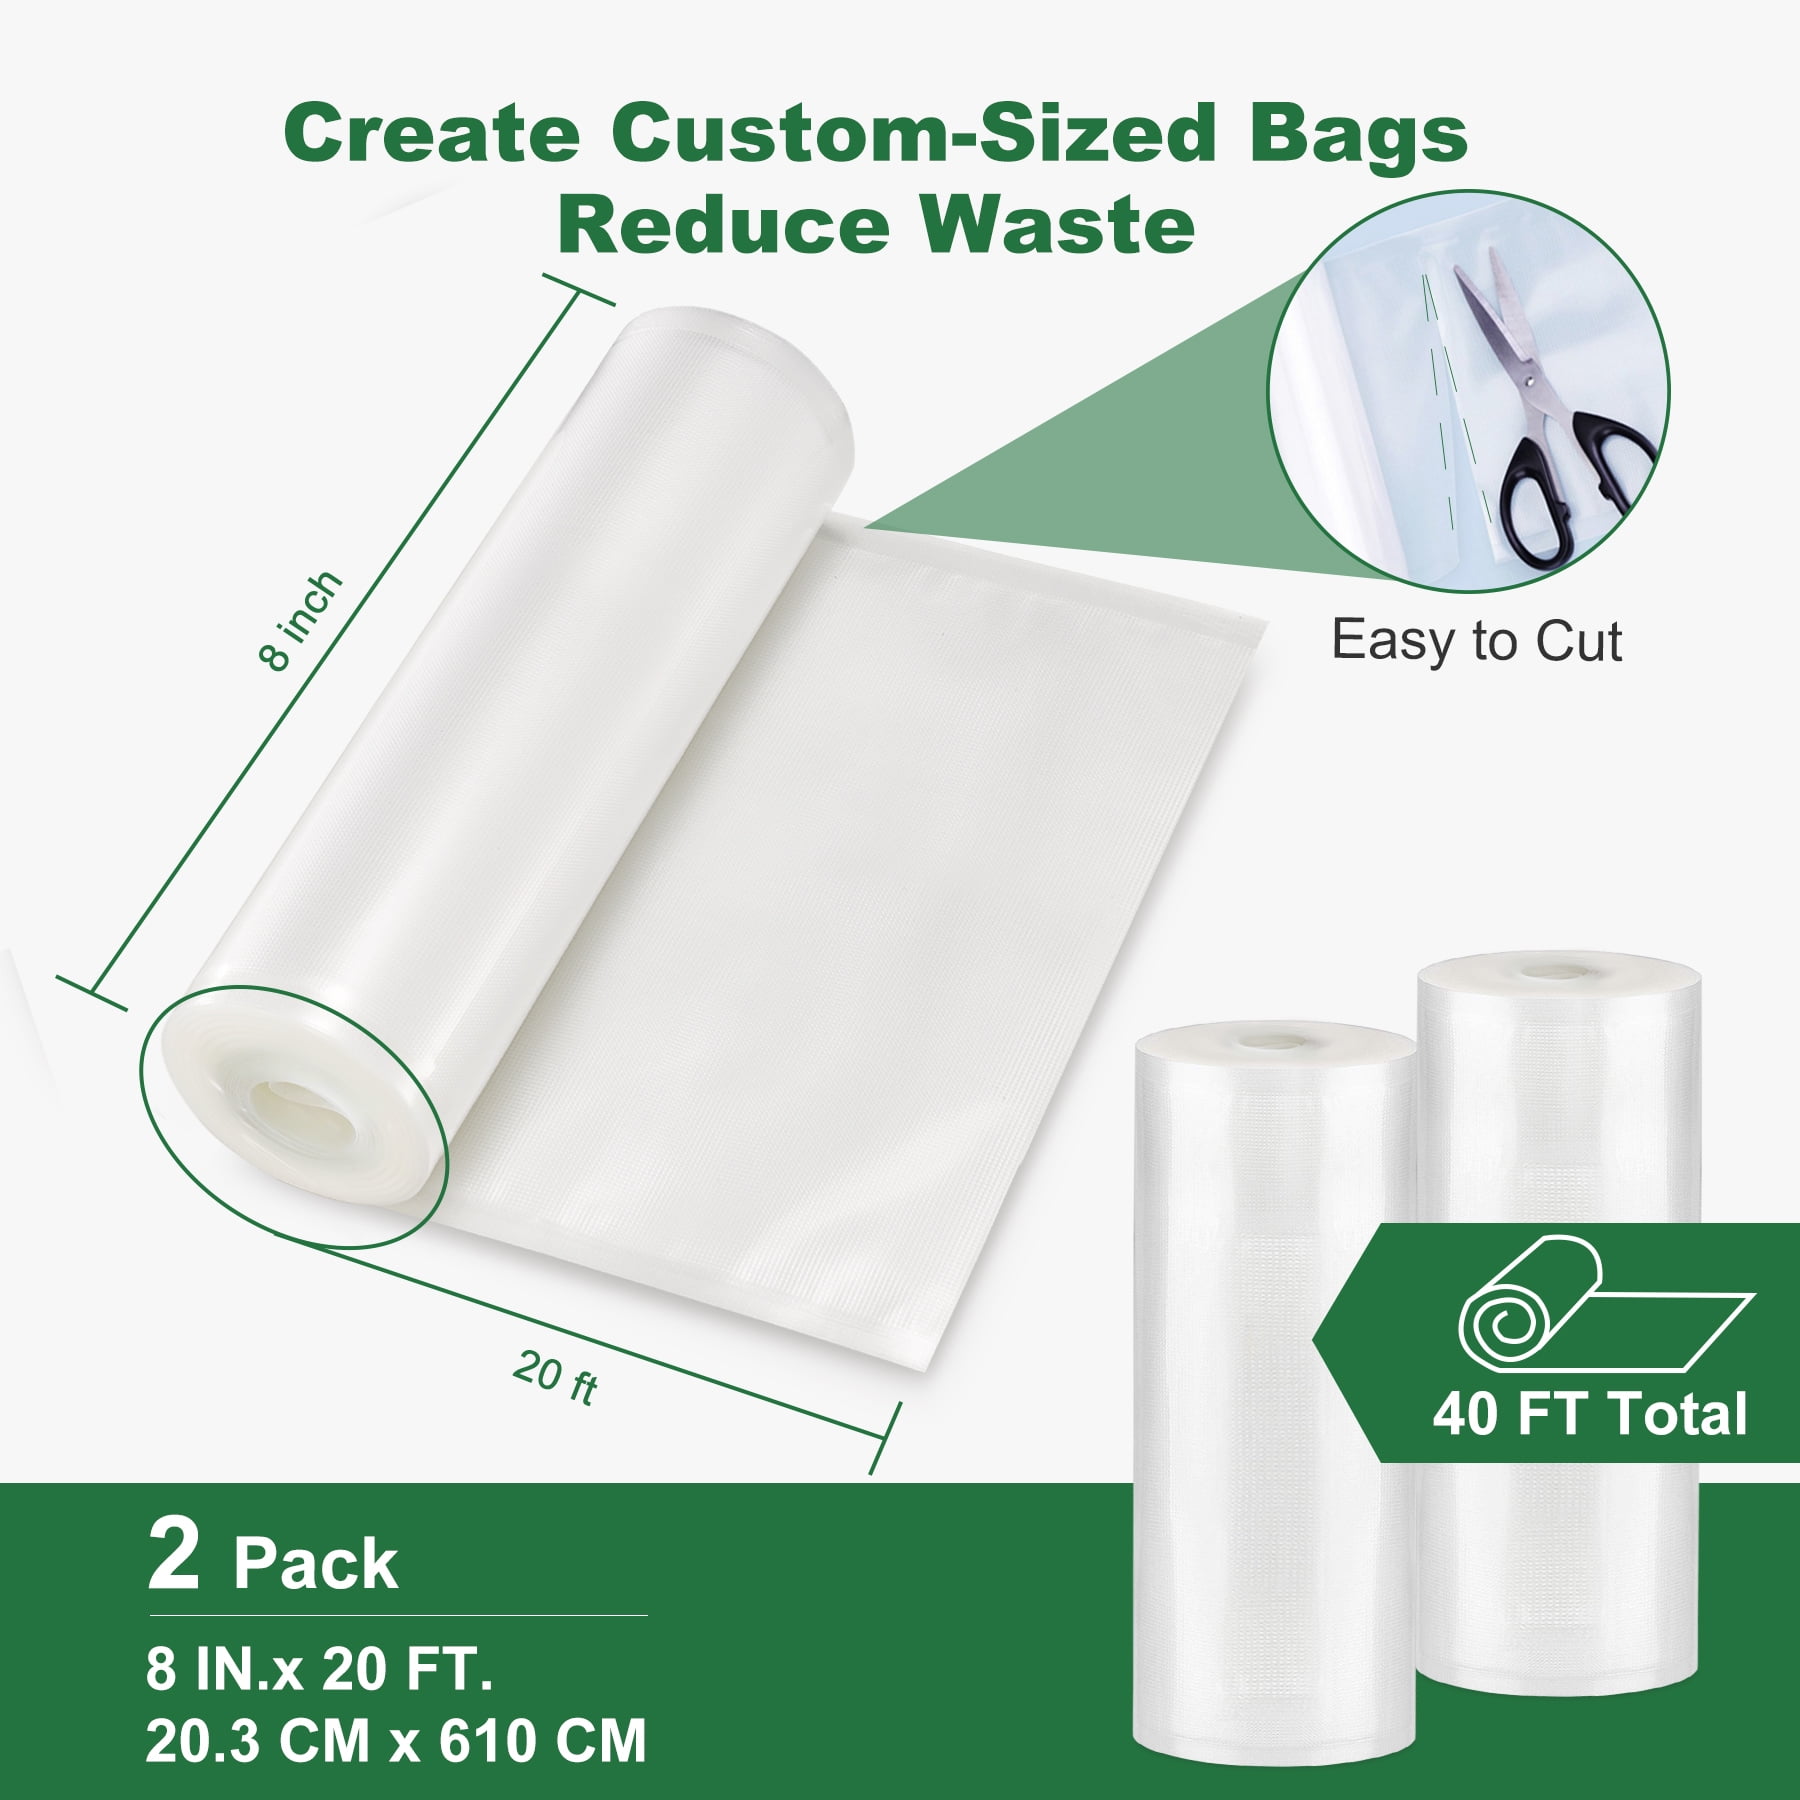 SKONYON Vacuum Sealer Bags ,4 Rolls, 2 packs 8.6x16.4\' & 2 packs